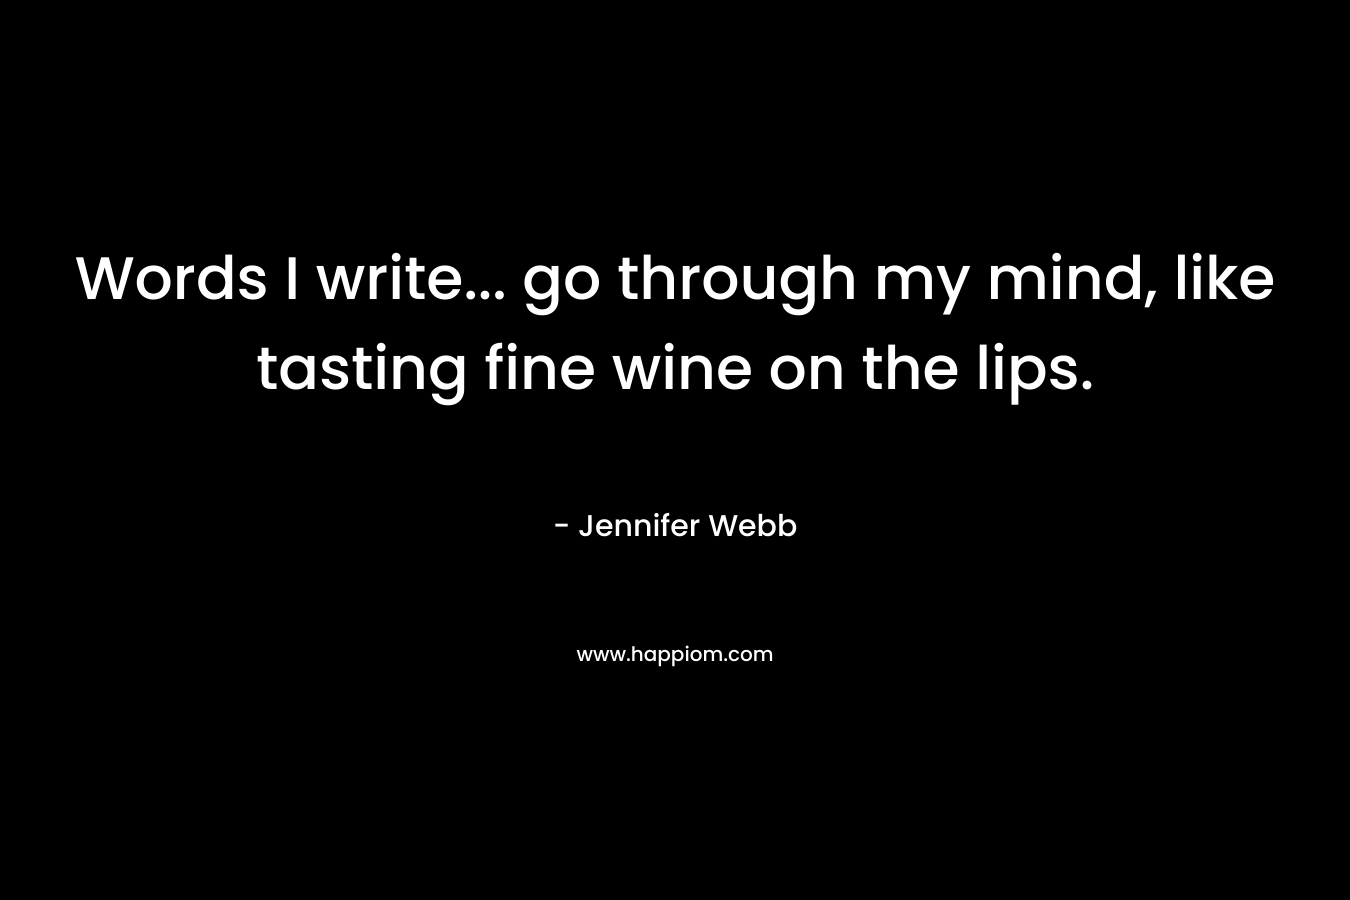 Words I write... go through my mind, like tasting fine wine on the lips.